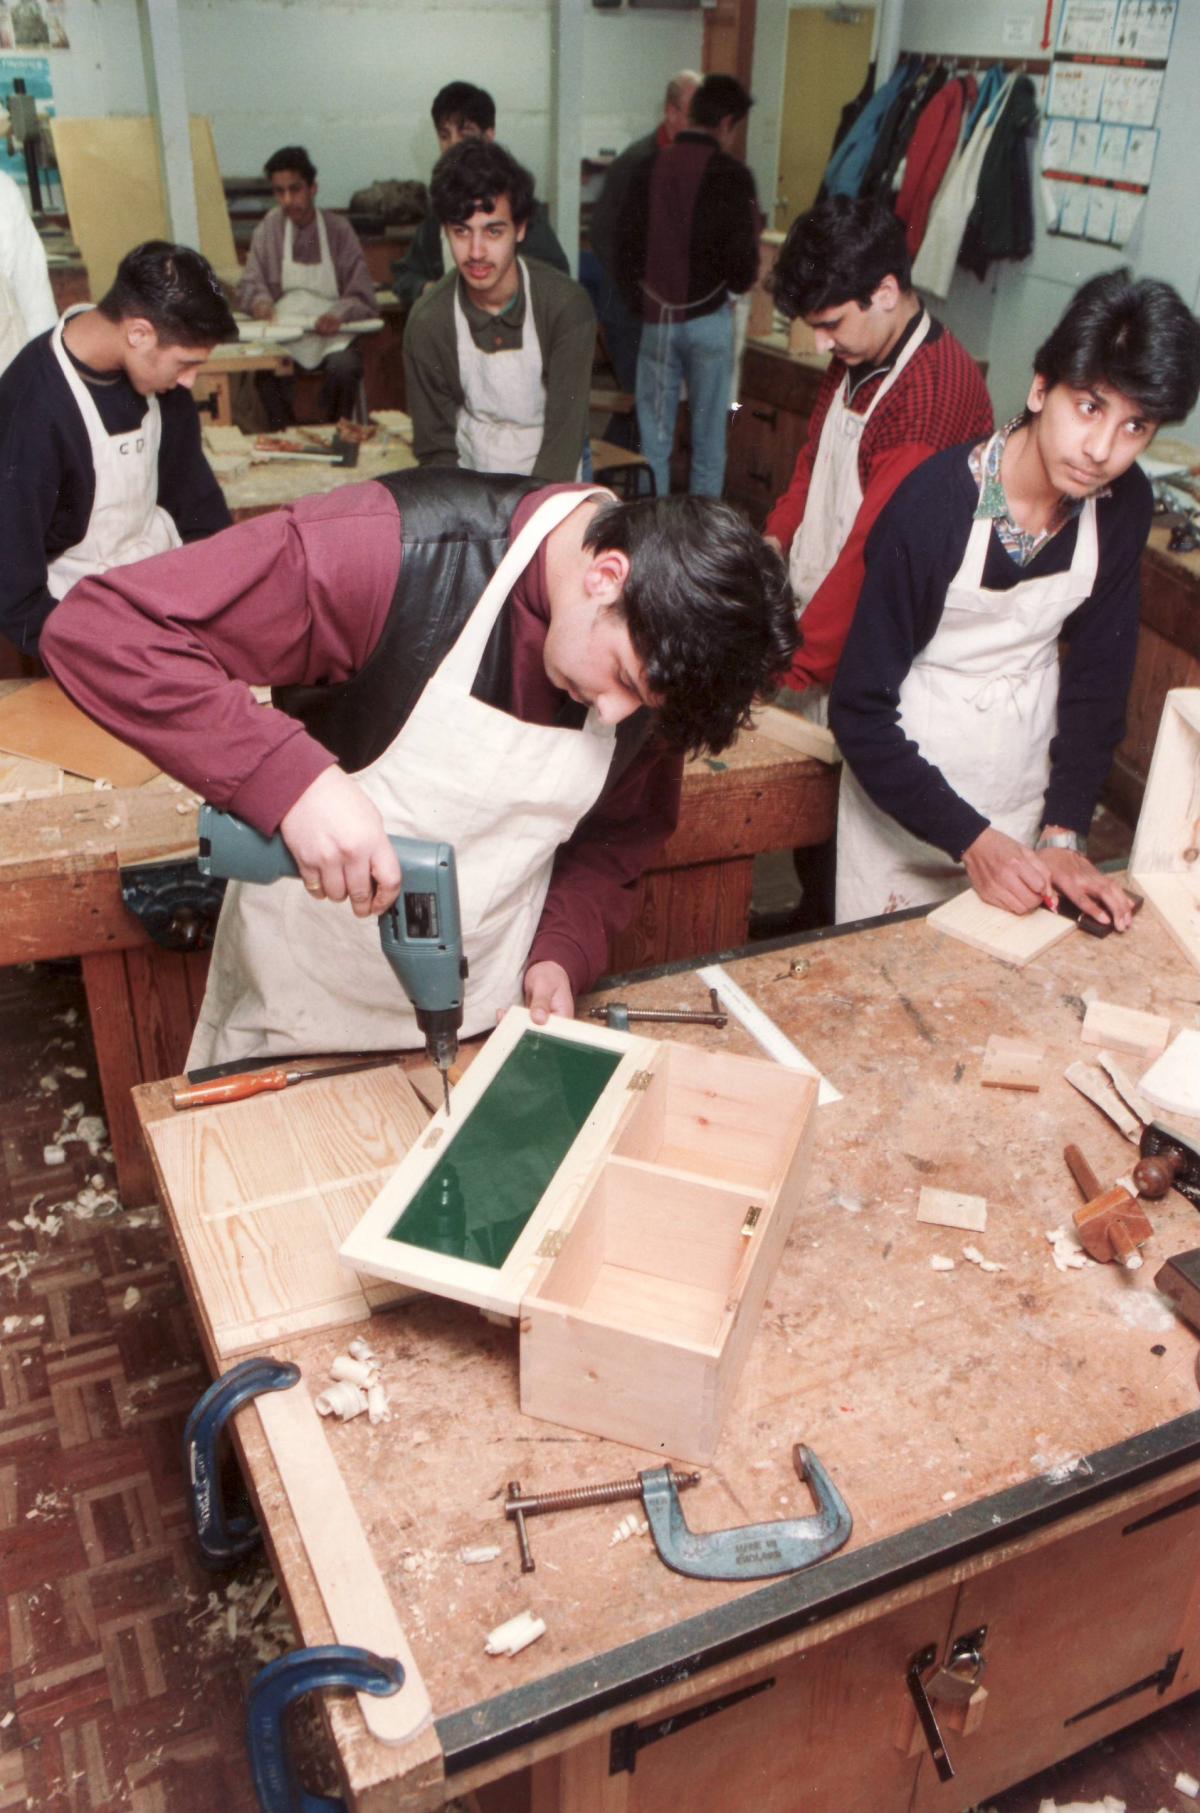 Half term students of Grange Upper School work through their school holiday 1994